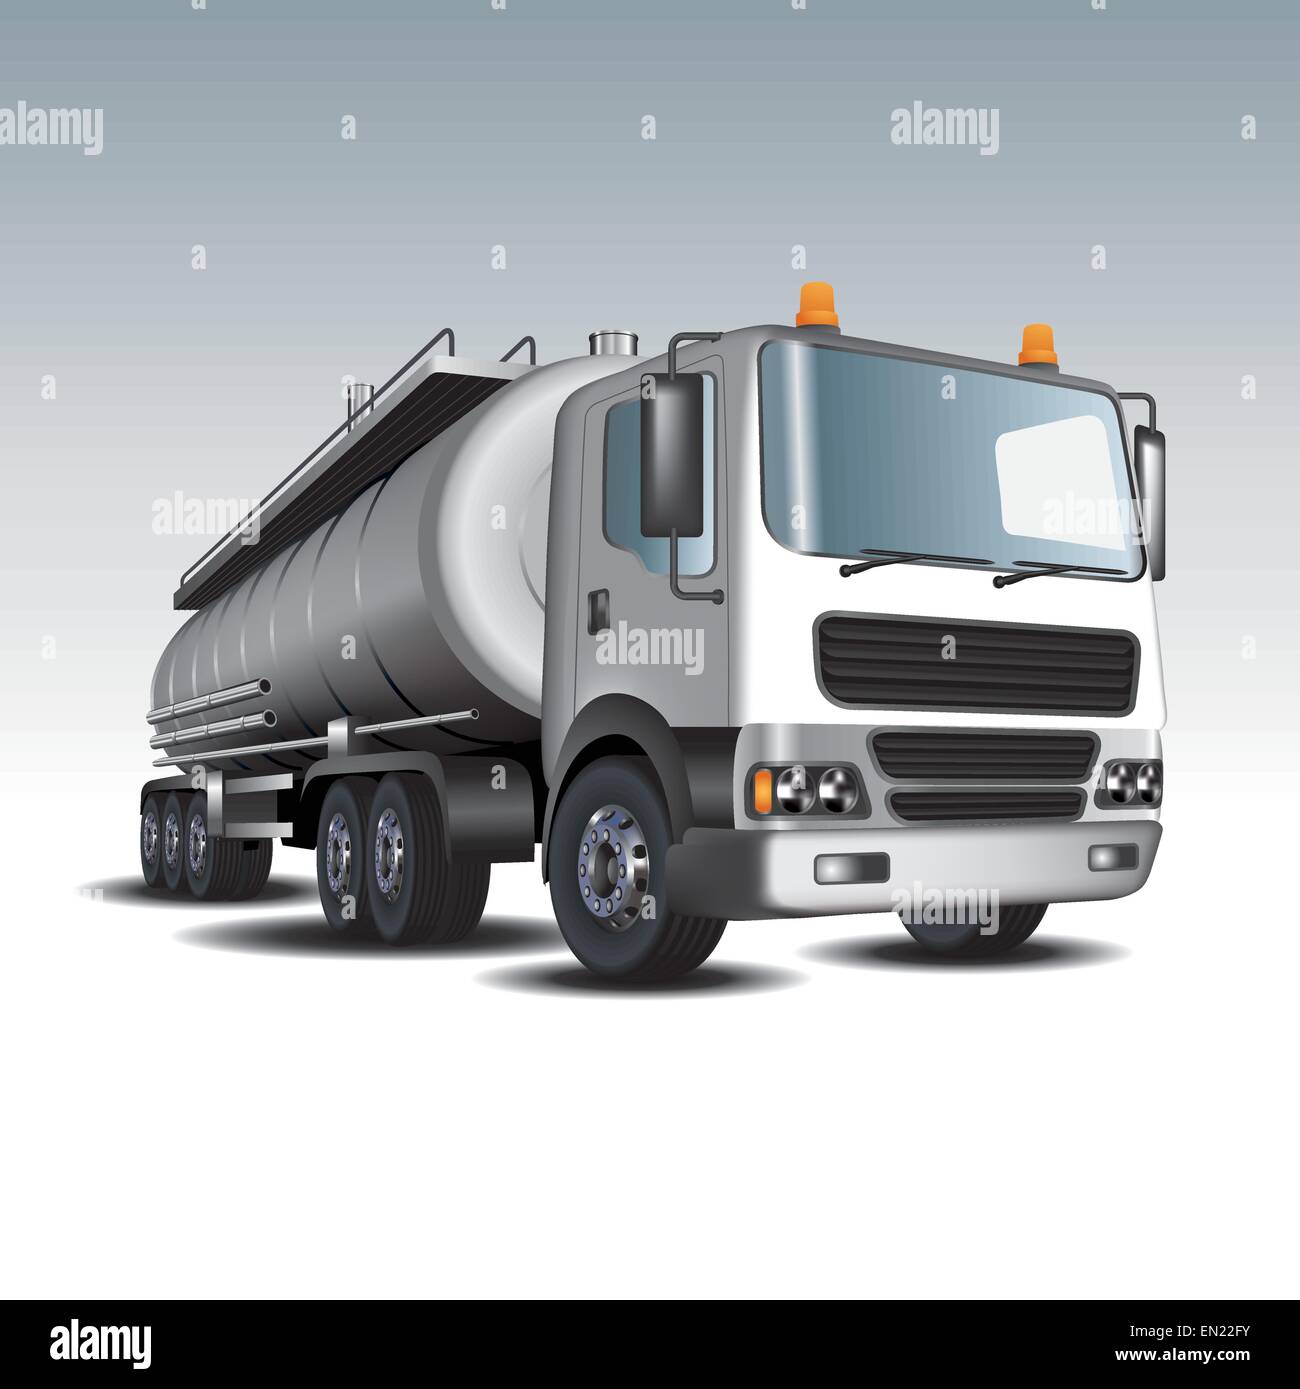 Tank truck and fuel tanks. Vector illustration Stock Vector